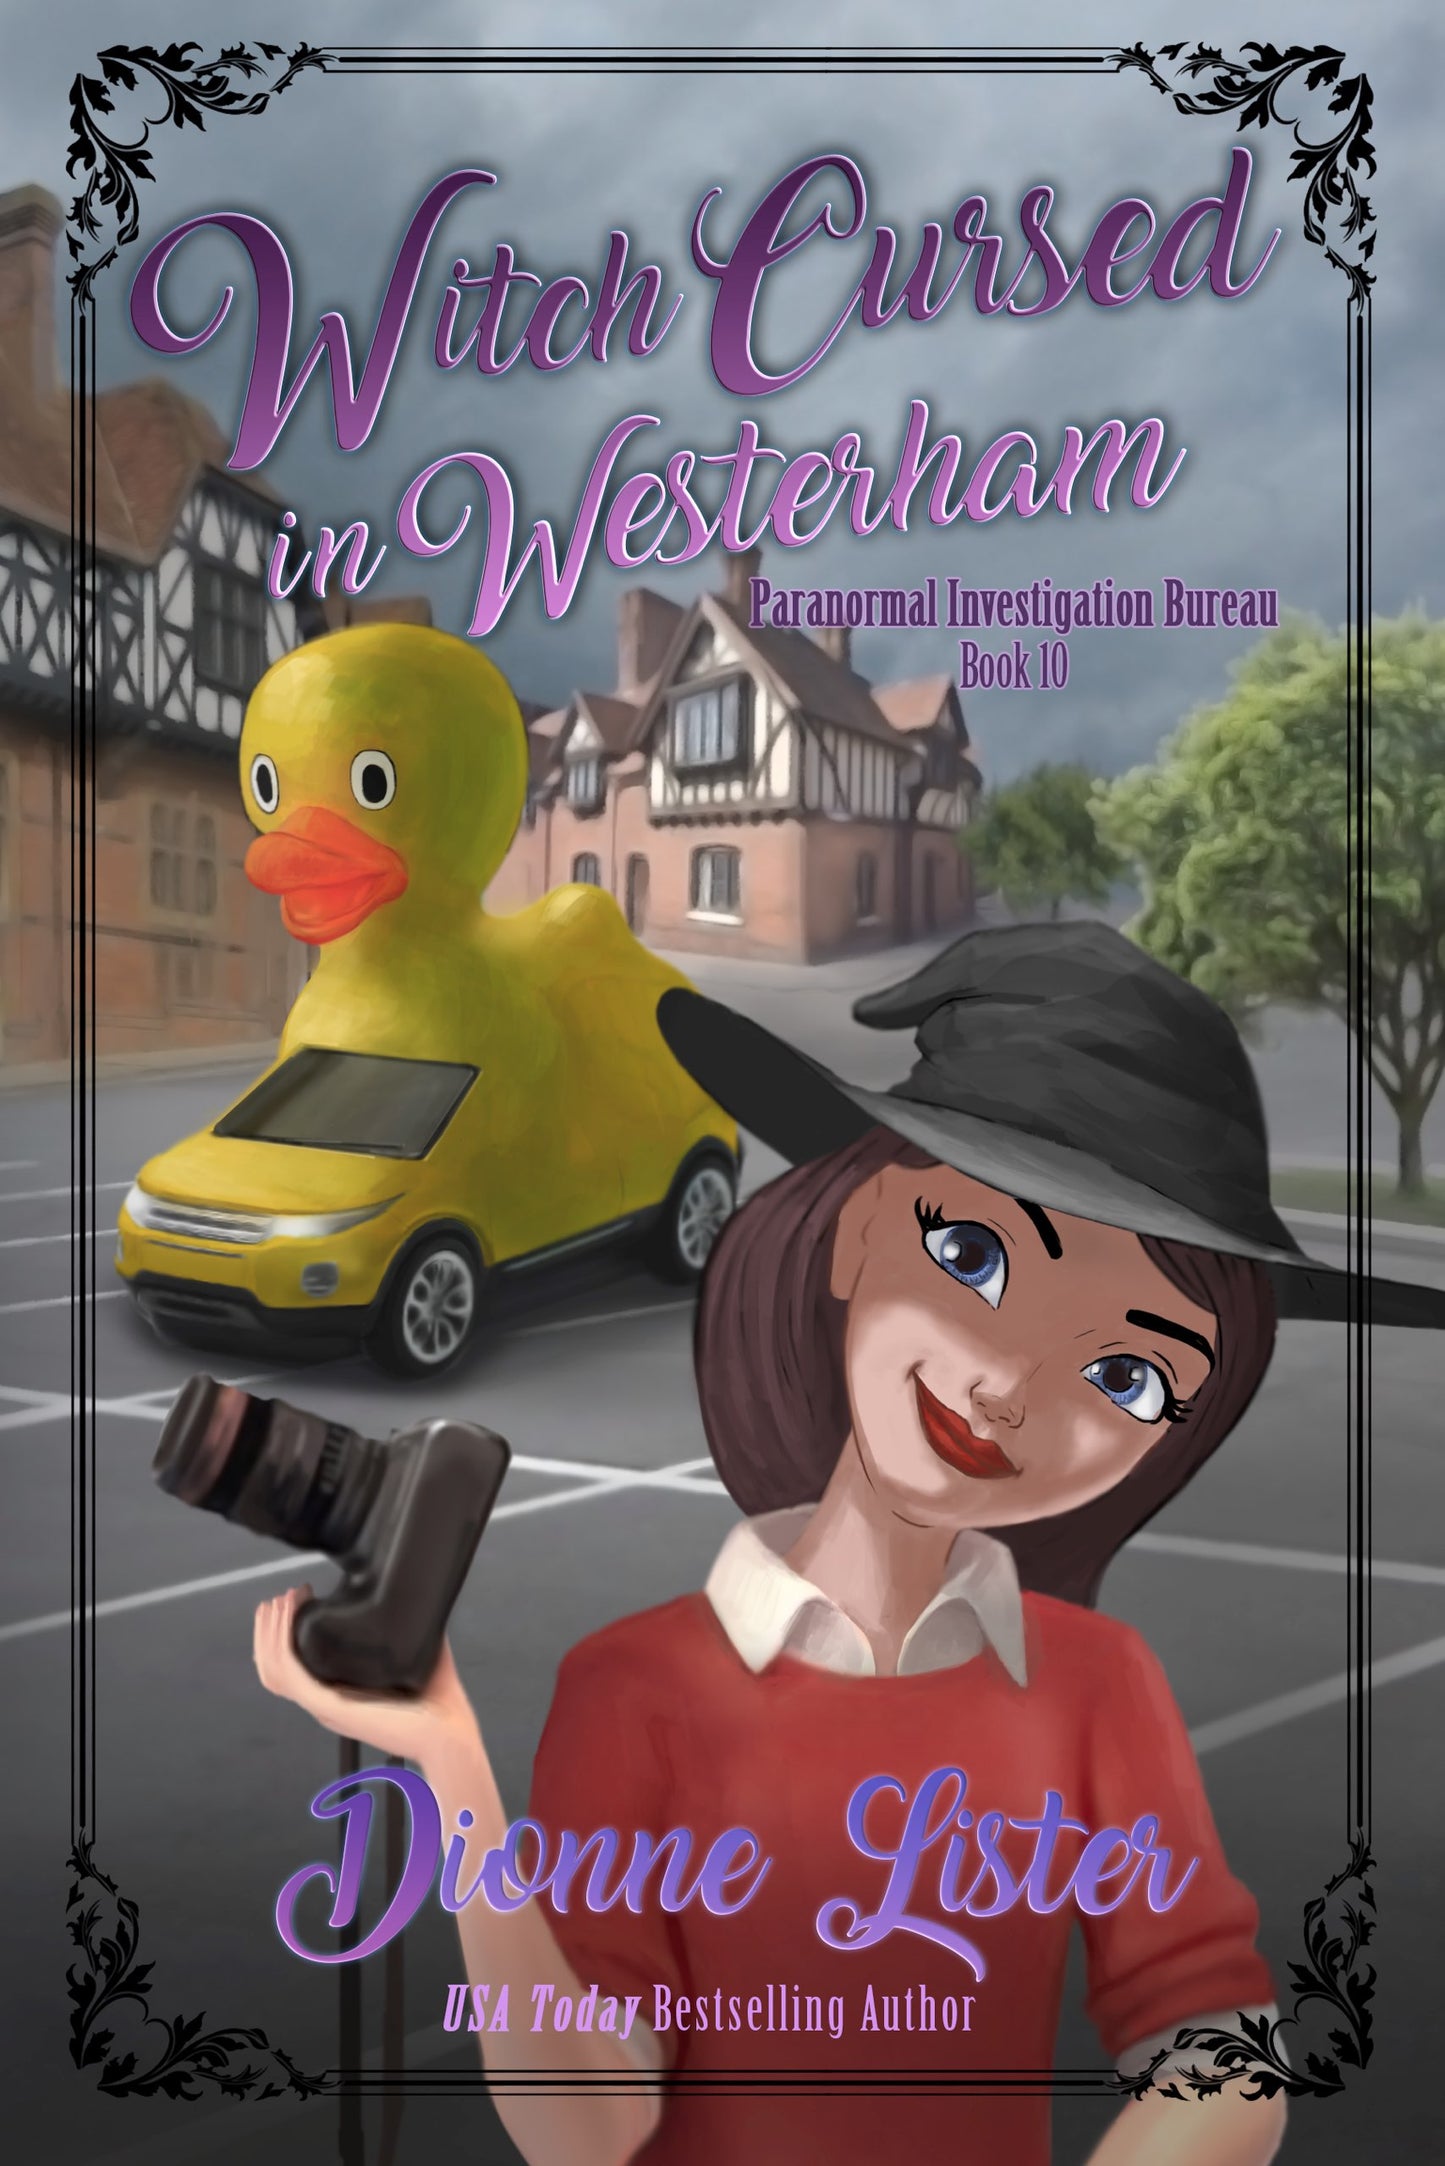 Witch Cursed in Westerham—Paranormal Investigation Bureau Book 10